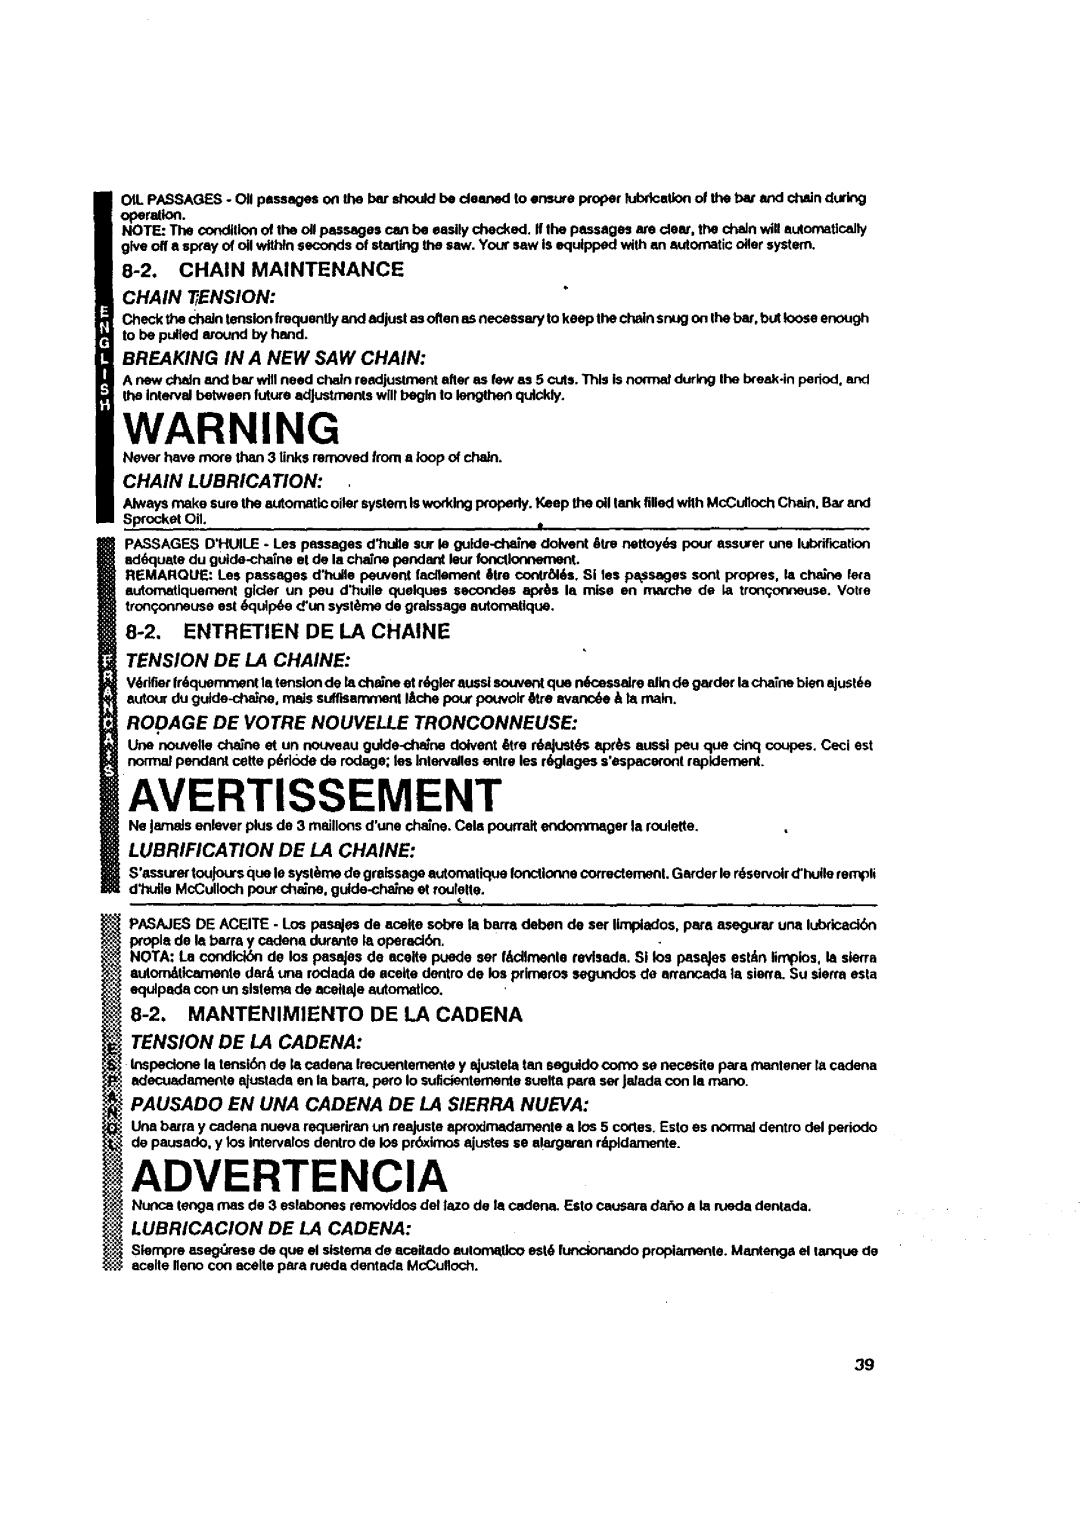 McCulloch MACE3210 Advertencia, 8_-:2,ENTRETIEN DE LA CHAINE, Mantenimiento De La Cadena, Chain Maintenance, Avertissement 